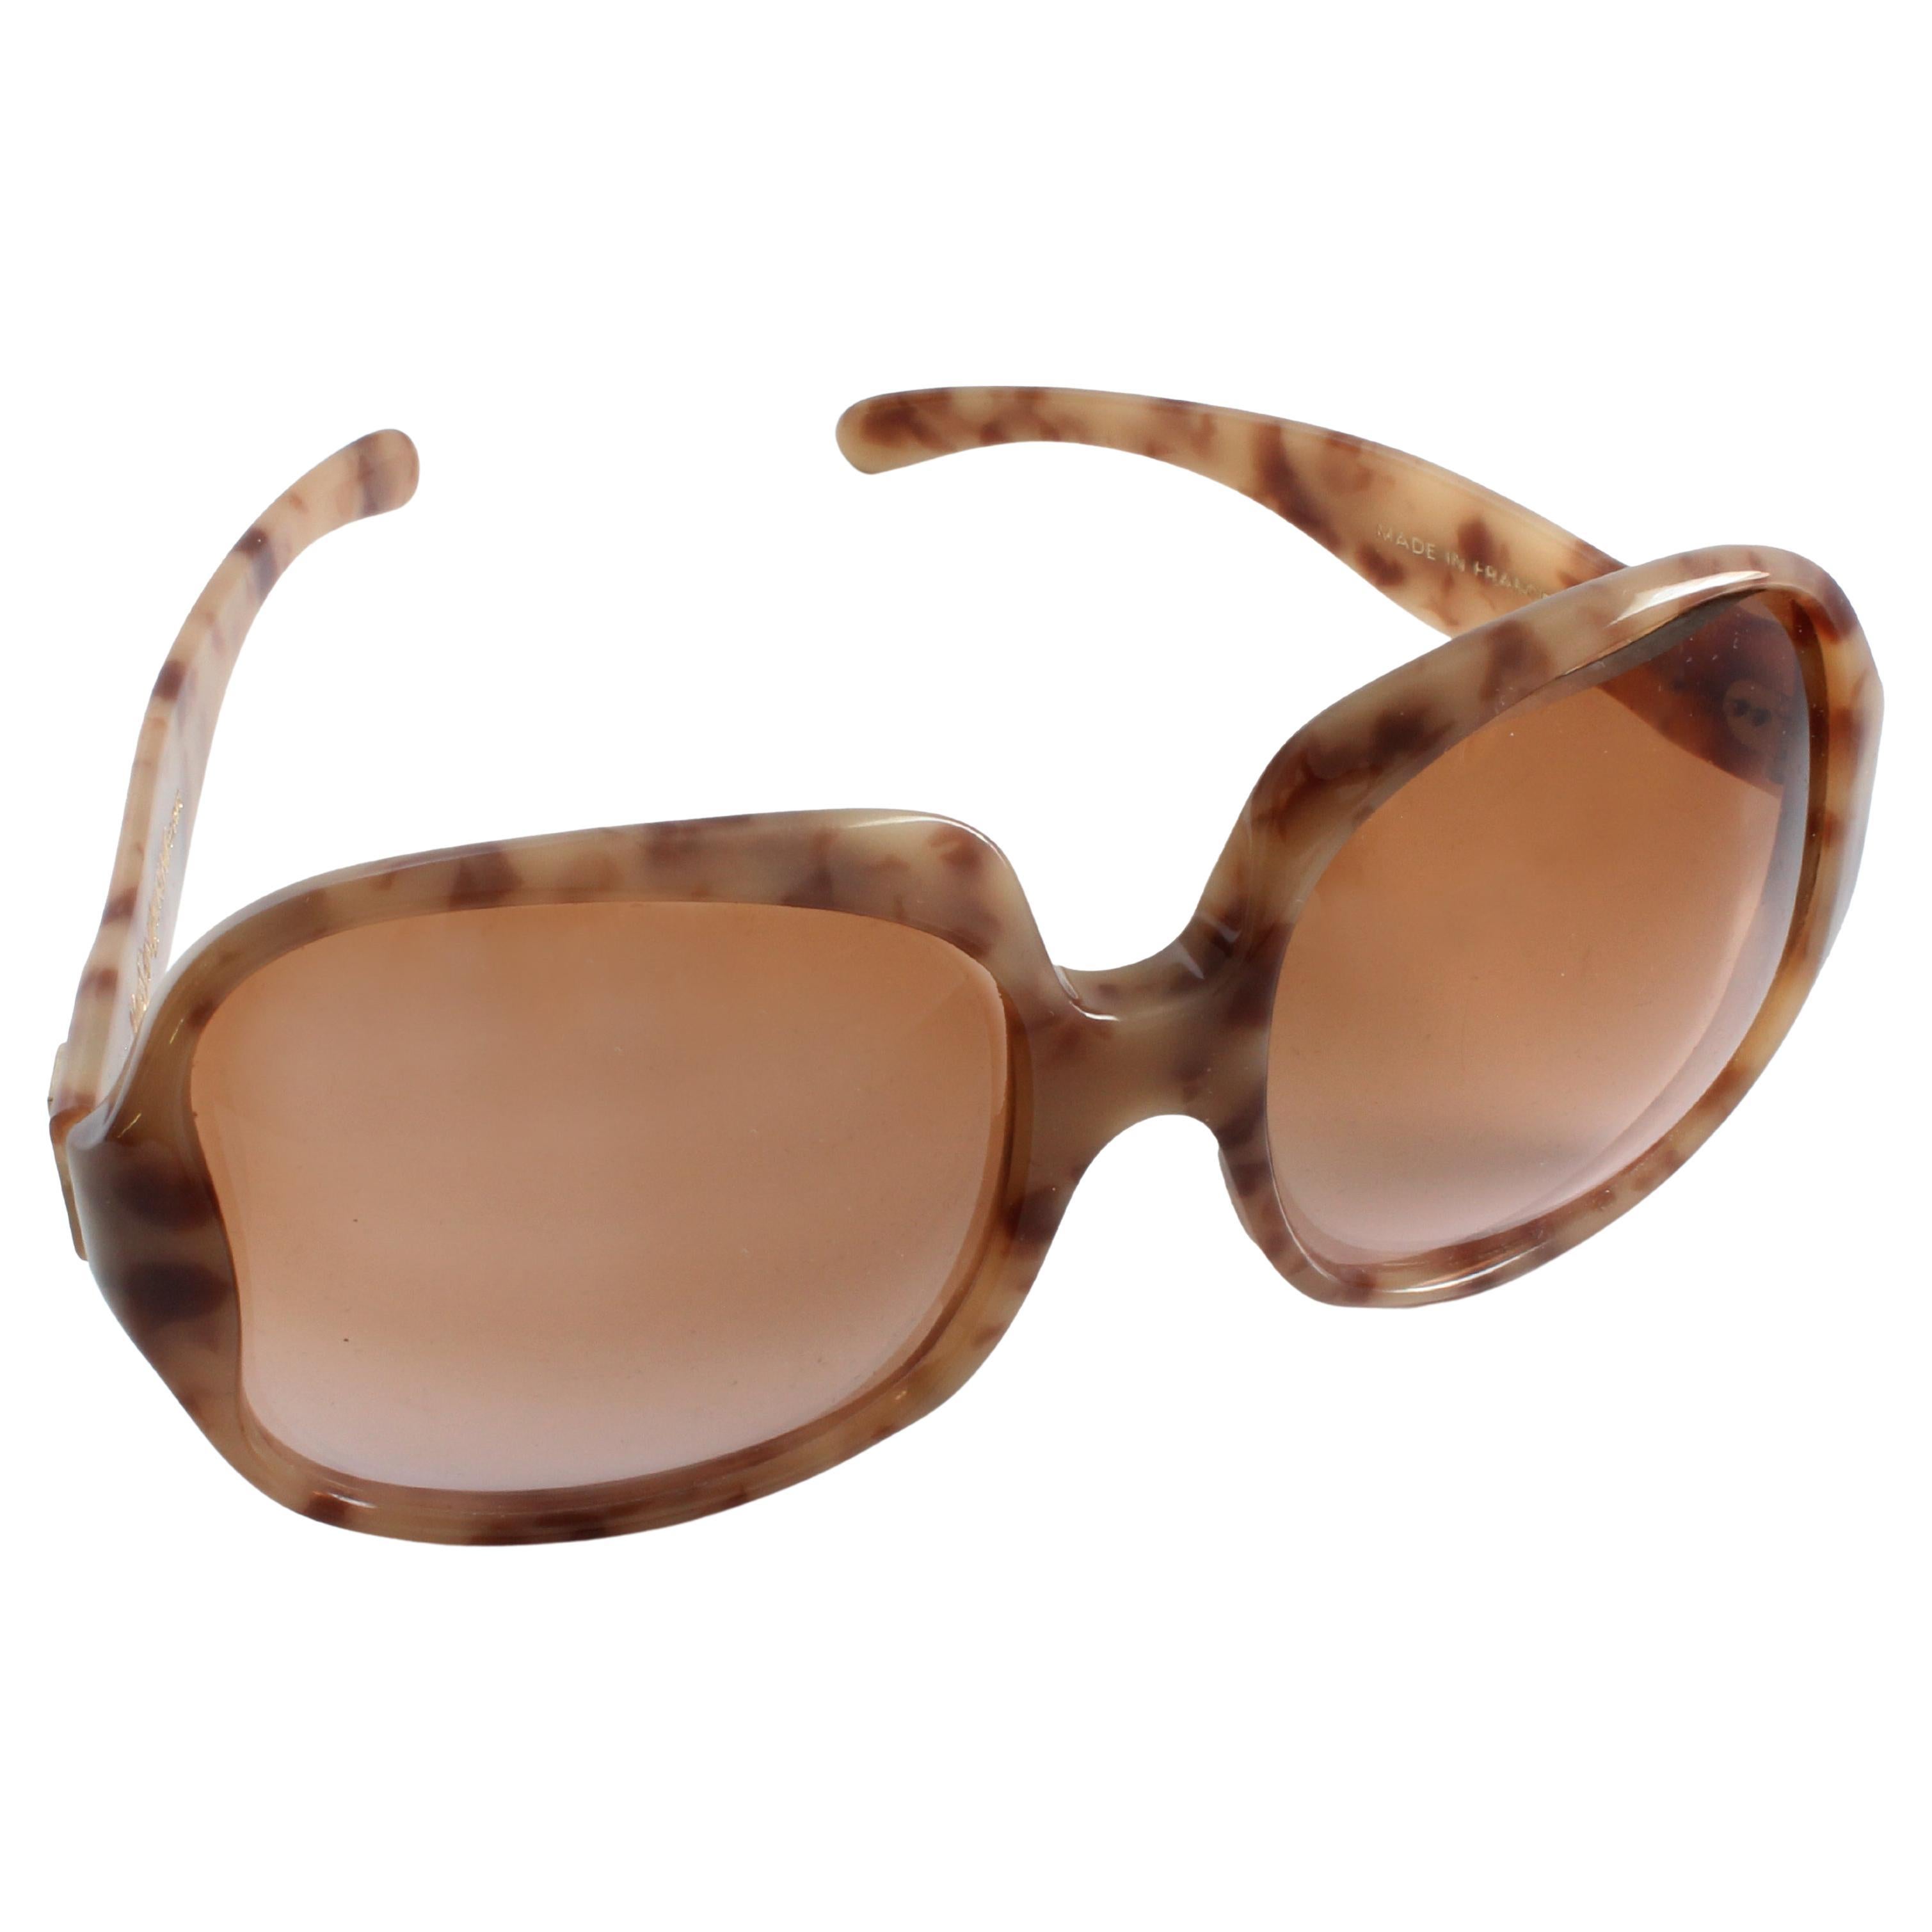 Yves Saint Laurent Sunglasses Large Tortoise Frames Vintage 